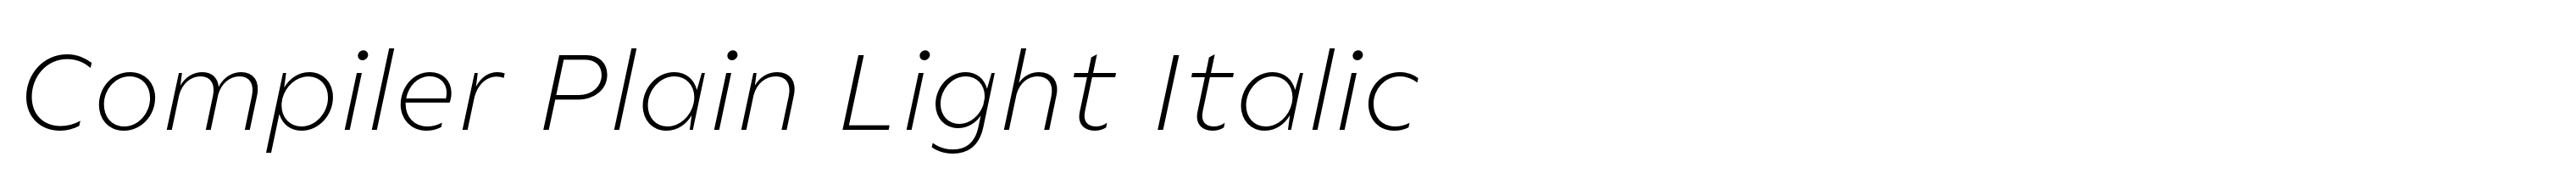 Compiler Plain Light Italic